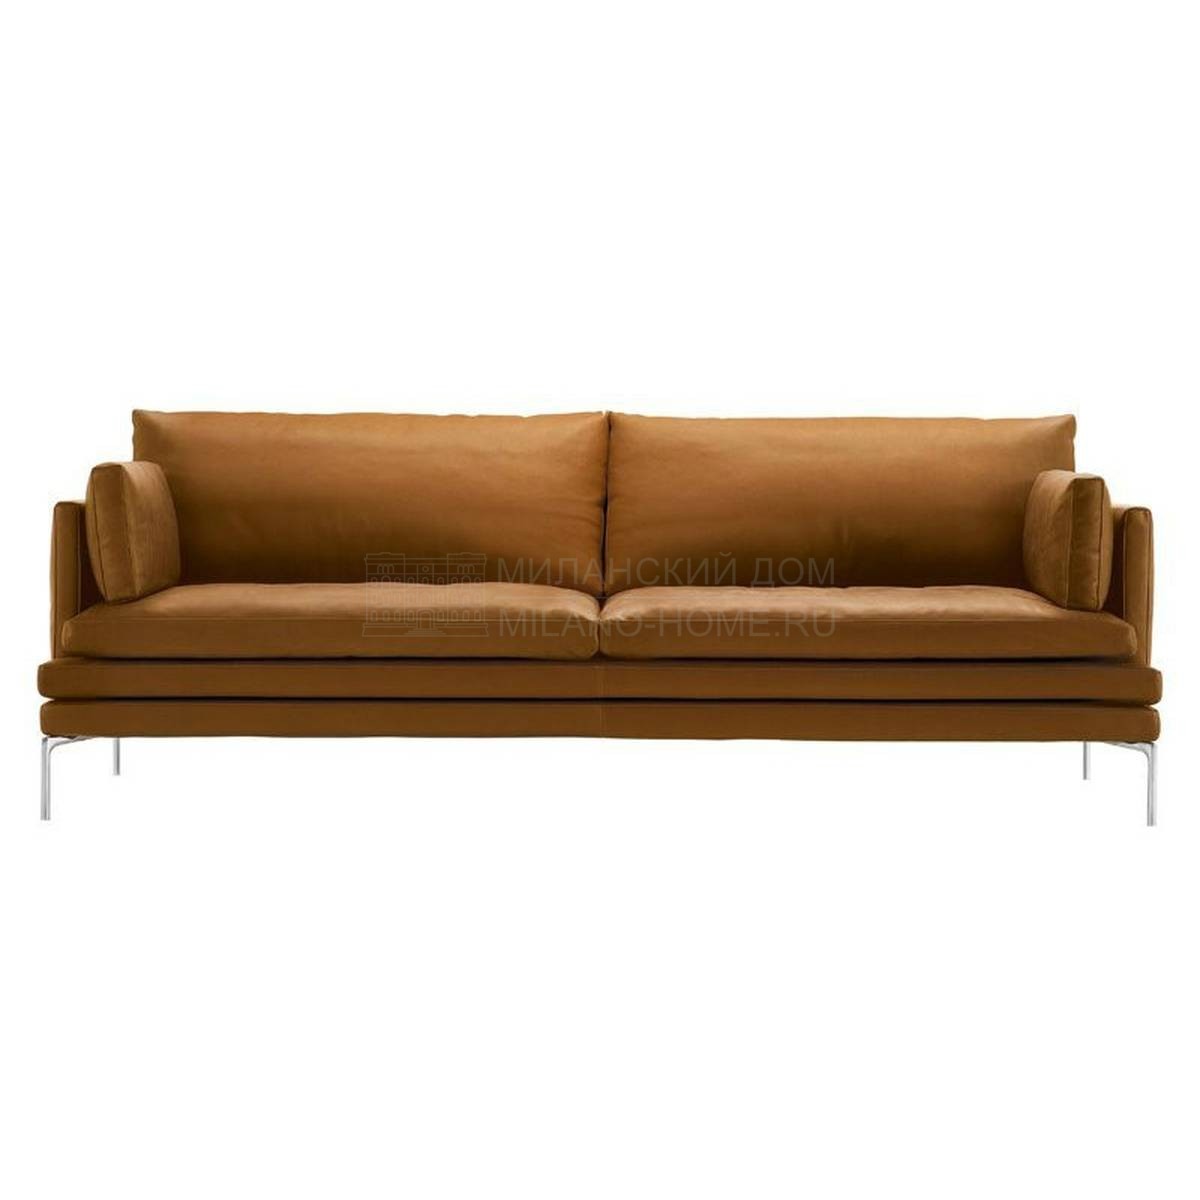 Прямой диван William sofa leather из Италии фабрики ZANOTTA